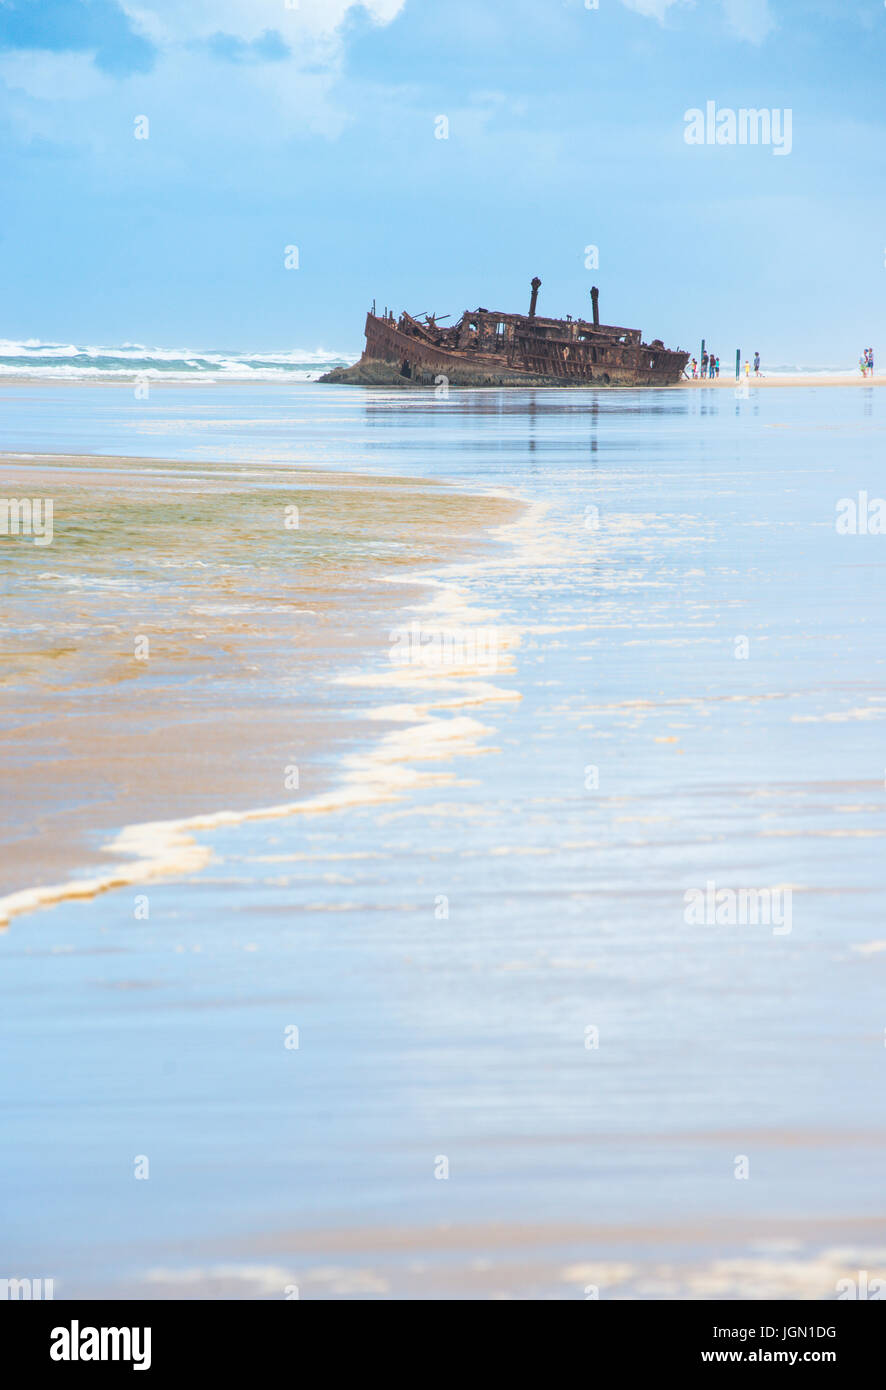 Maheno Shipwreck, Fraser Island, UNESCO World Heritage Site, Queensland, Australia. Stock Photo